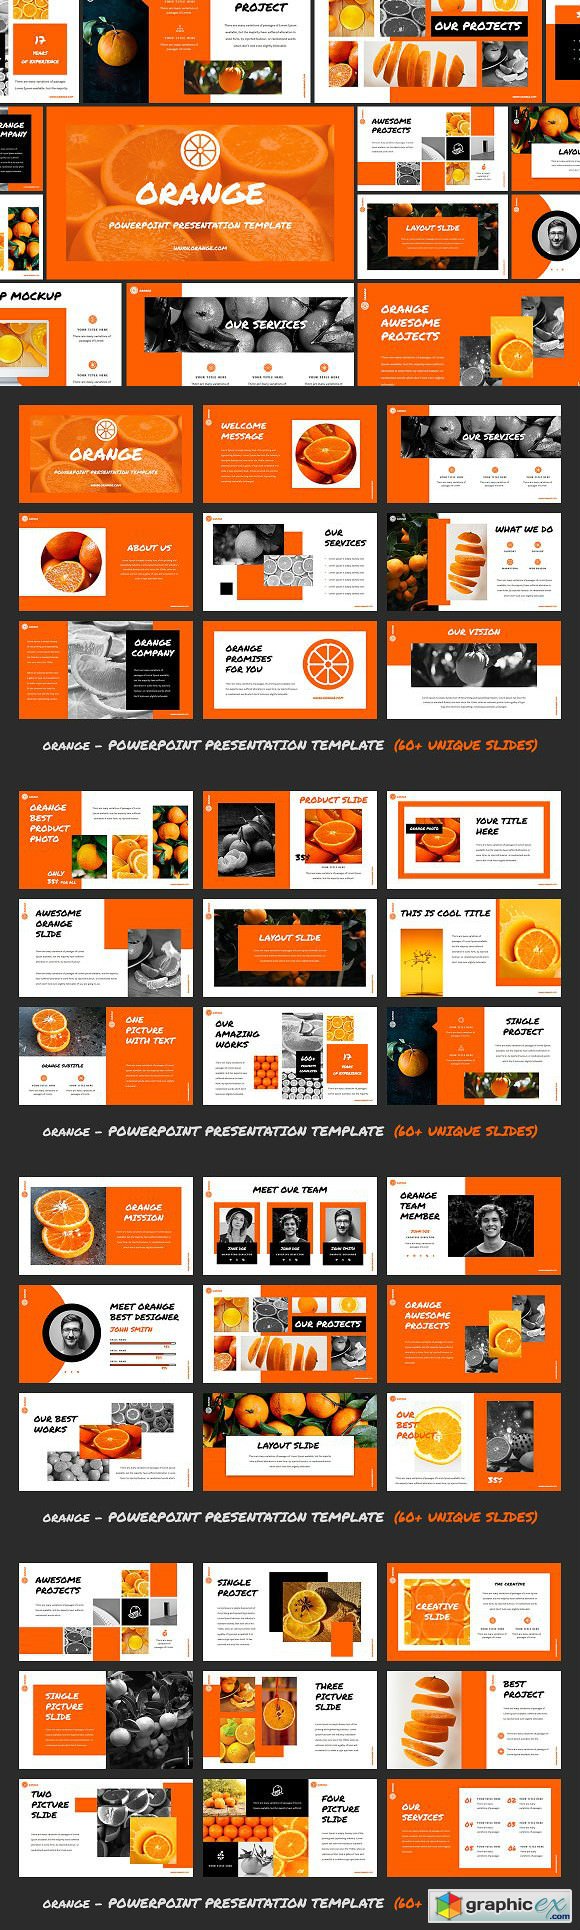 Orange - Powerpoint Template